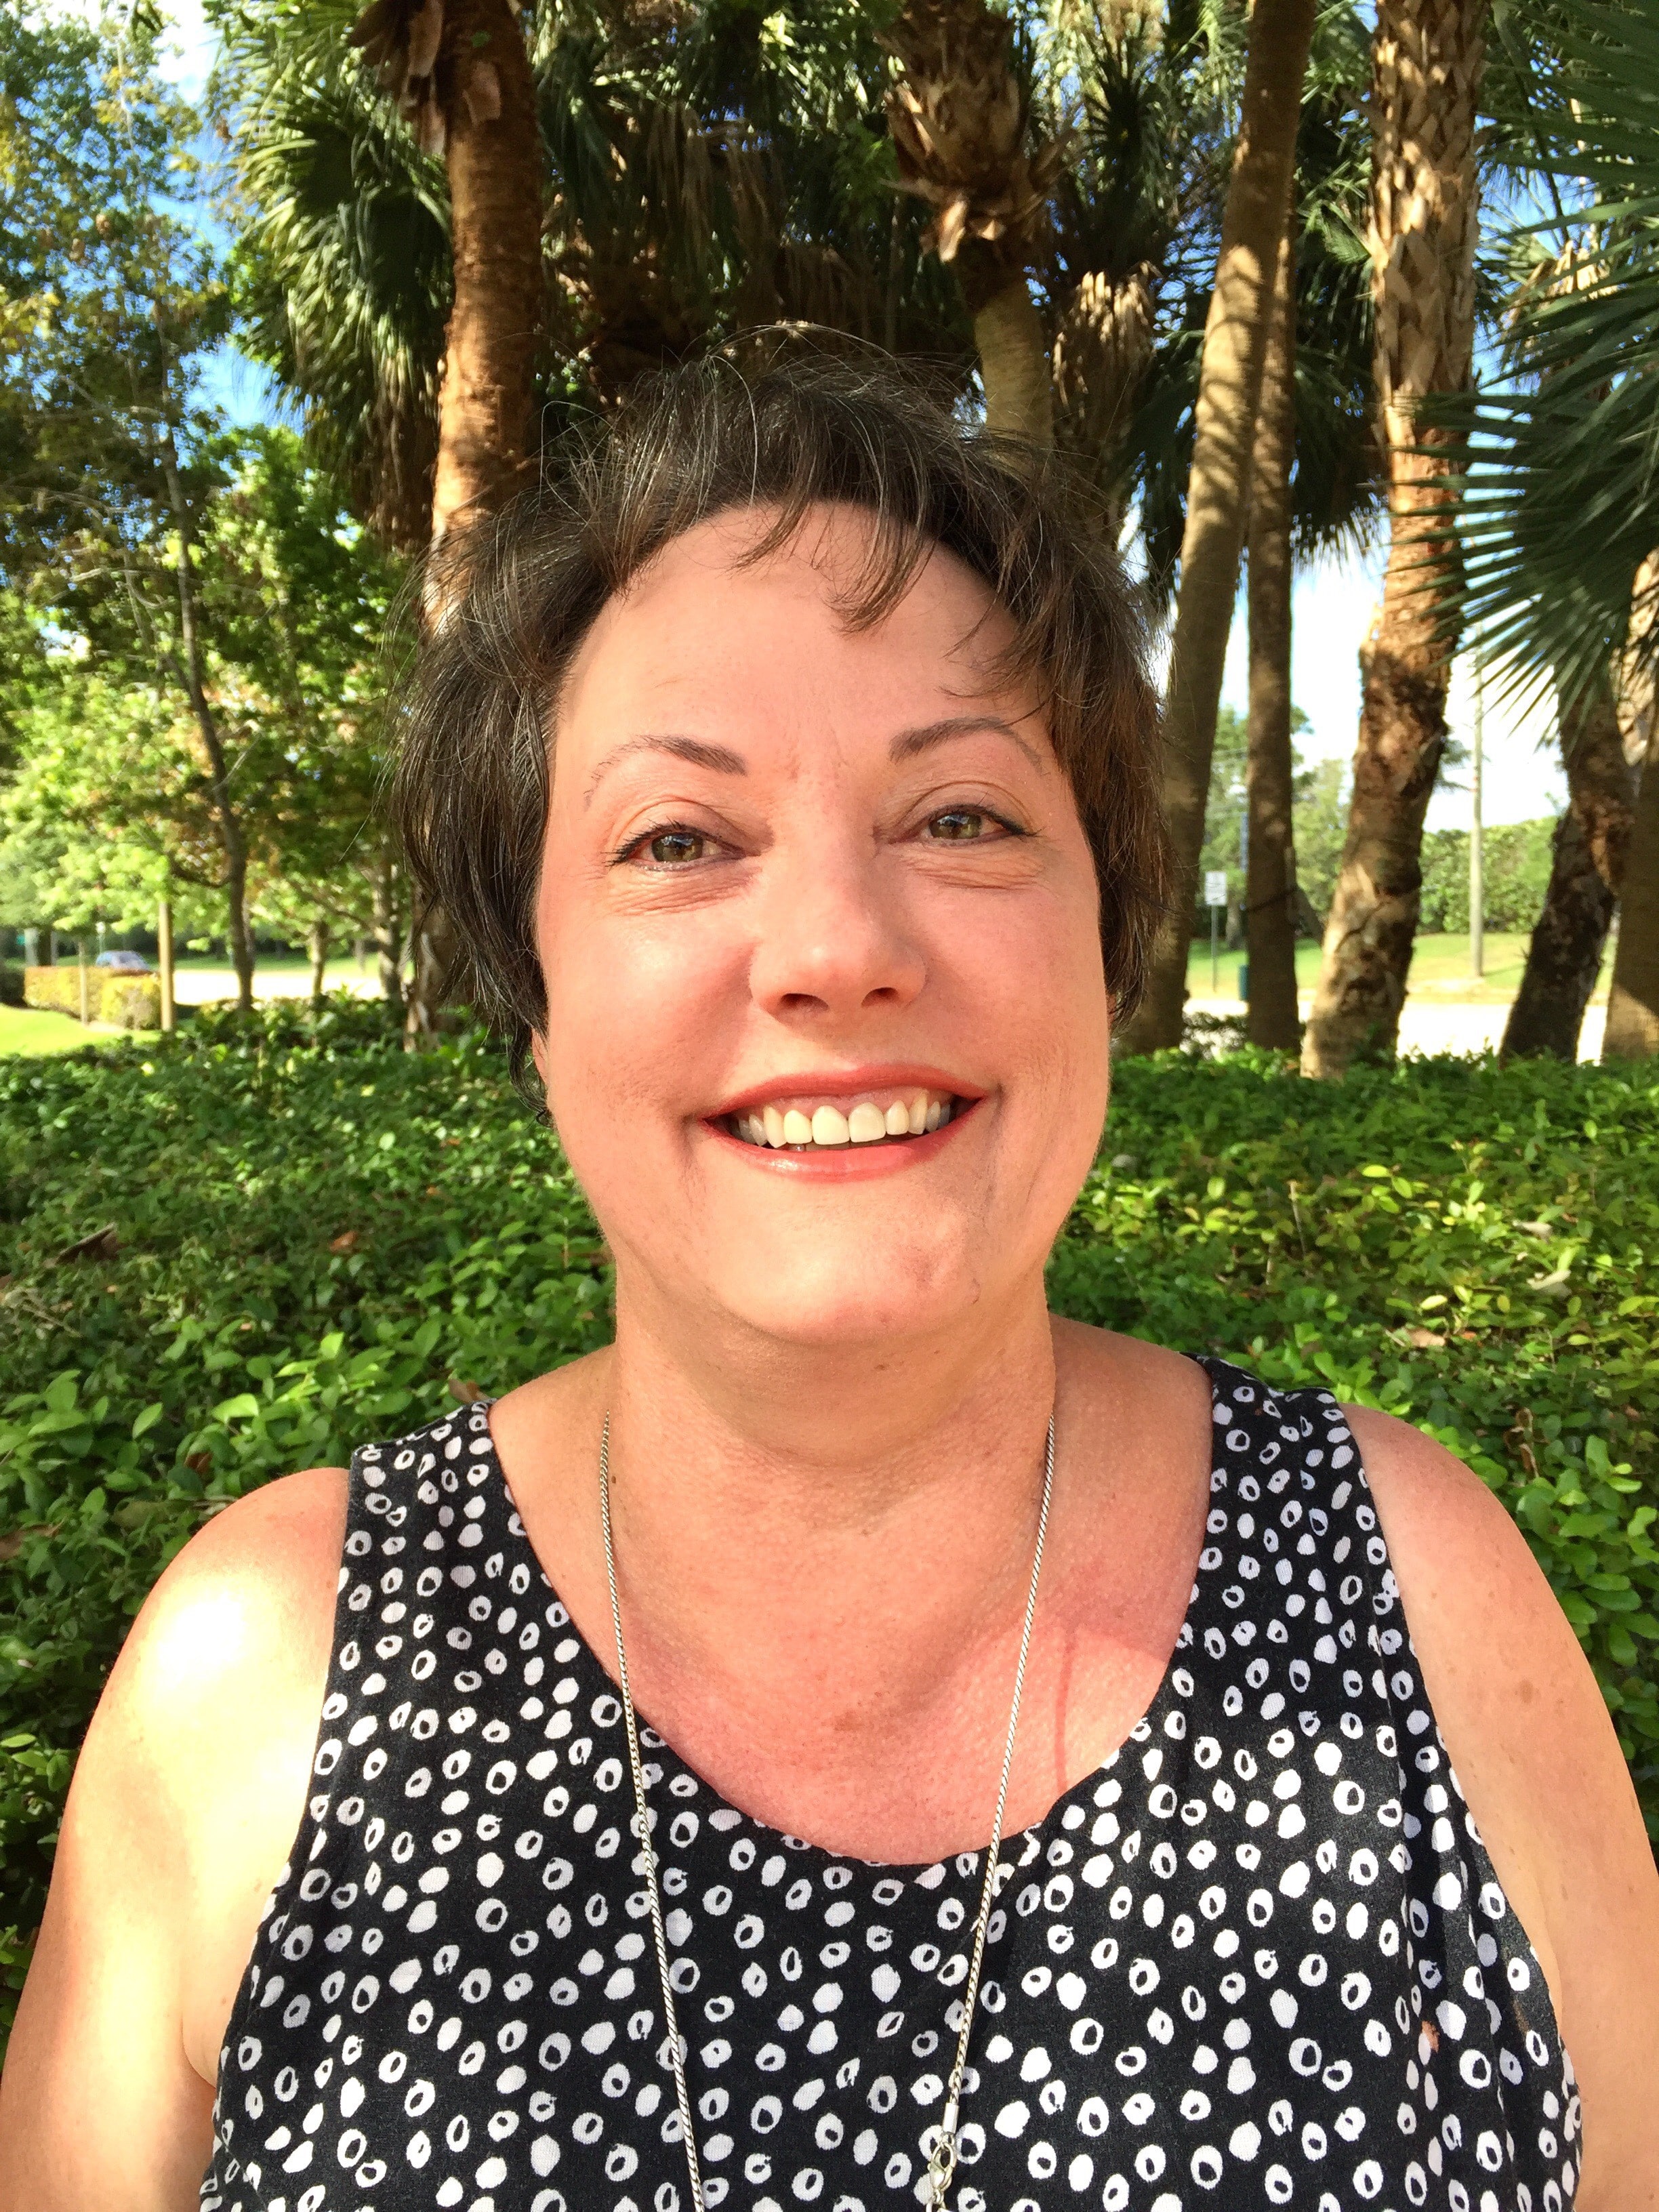 FACULTY SPOTLIGHT for #NursesWeek – Melissa Helle MSN, RN at KU West Palm Beach